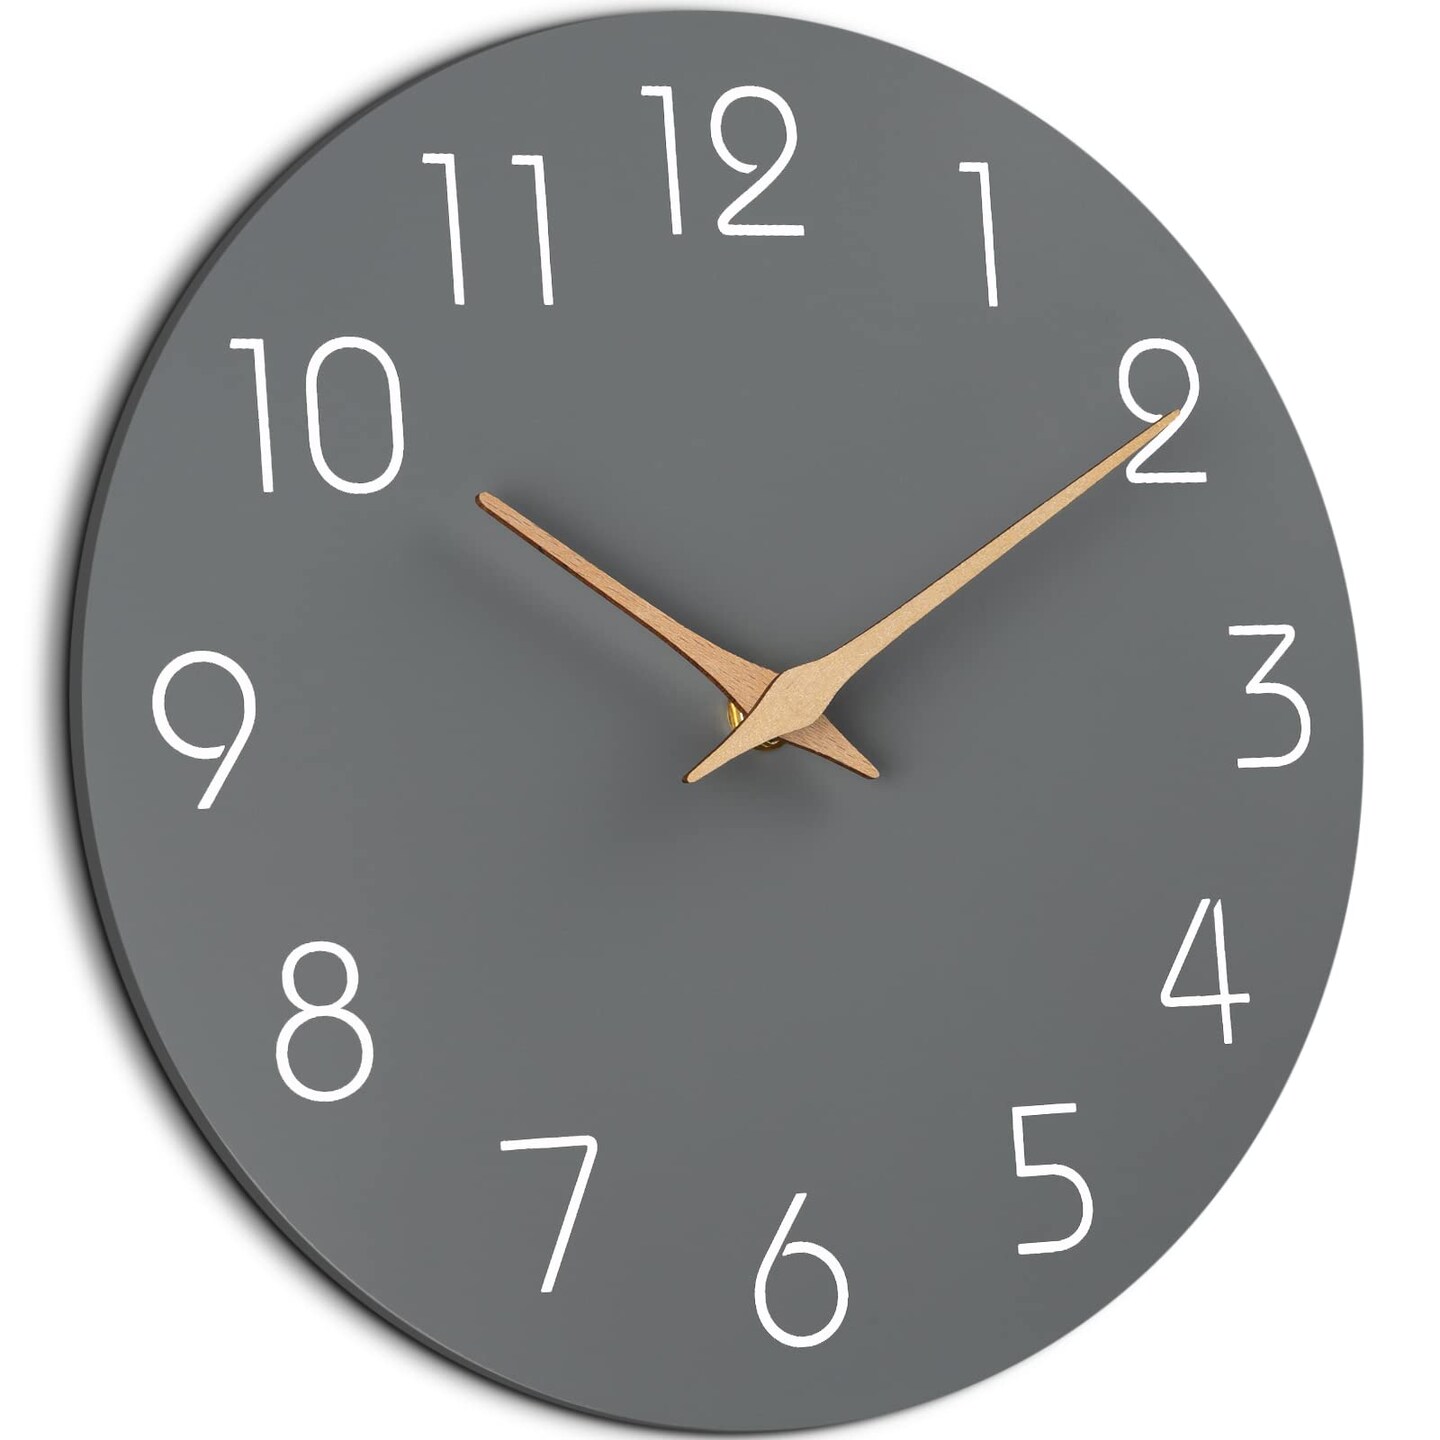 Mosewa Wall Clock 12 Inch Silent Non-Ticking Wall Clocks Battery ...